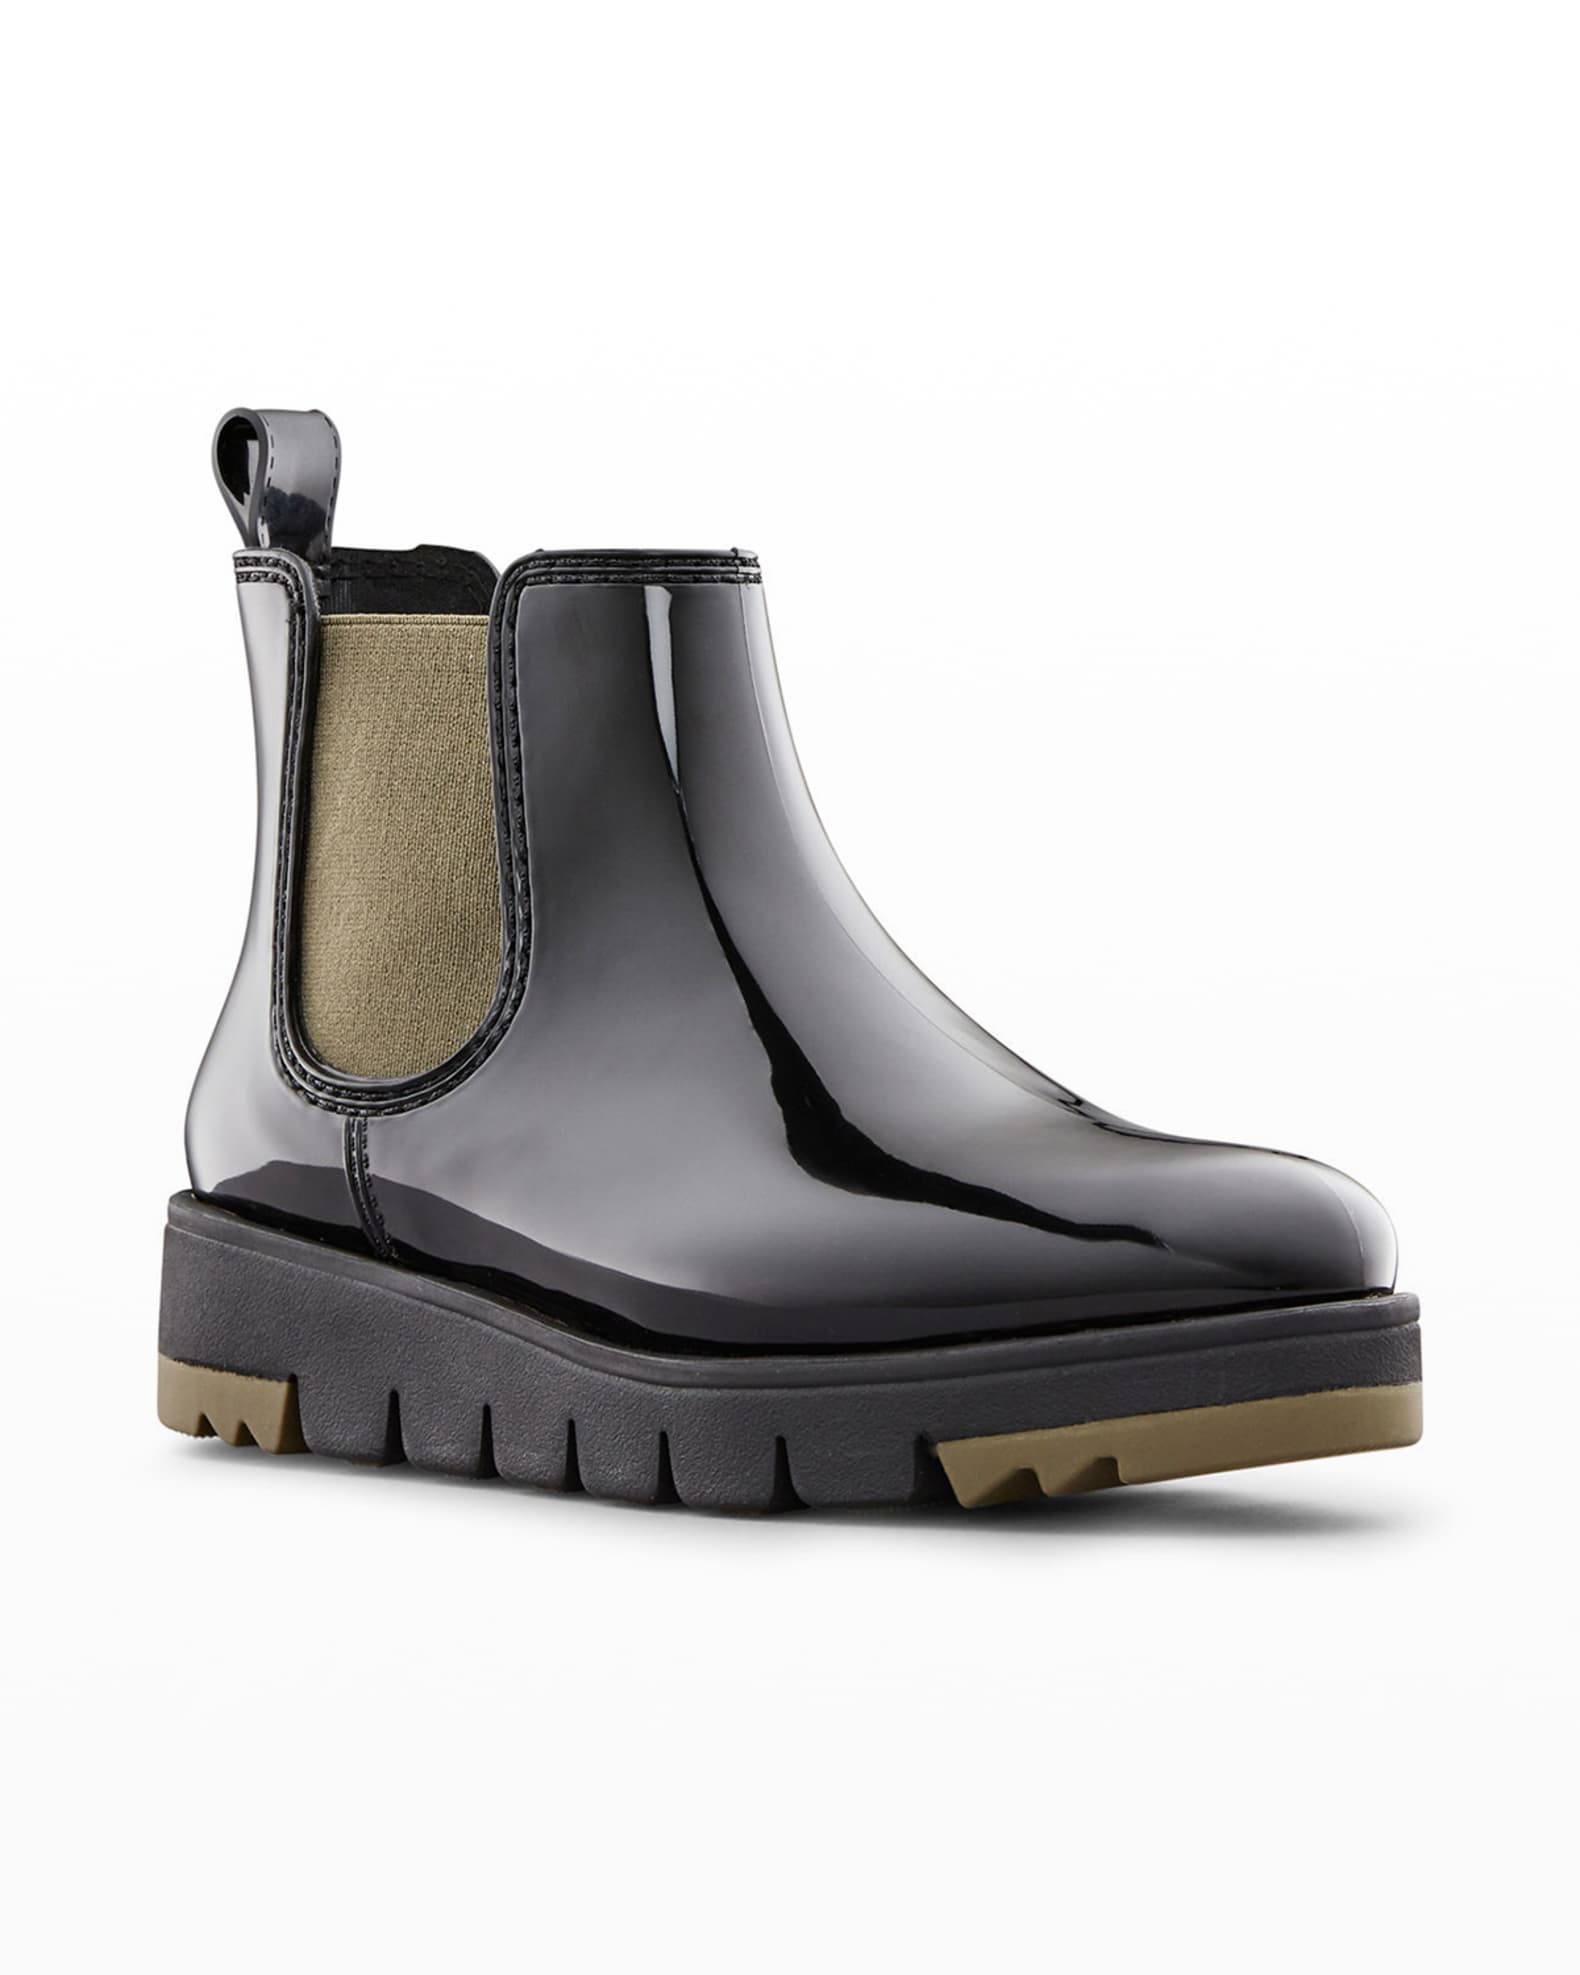 Cougar Firenze Glossy Chelsea Rain Boots | Neiman Marcus